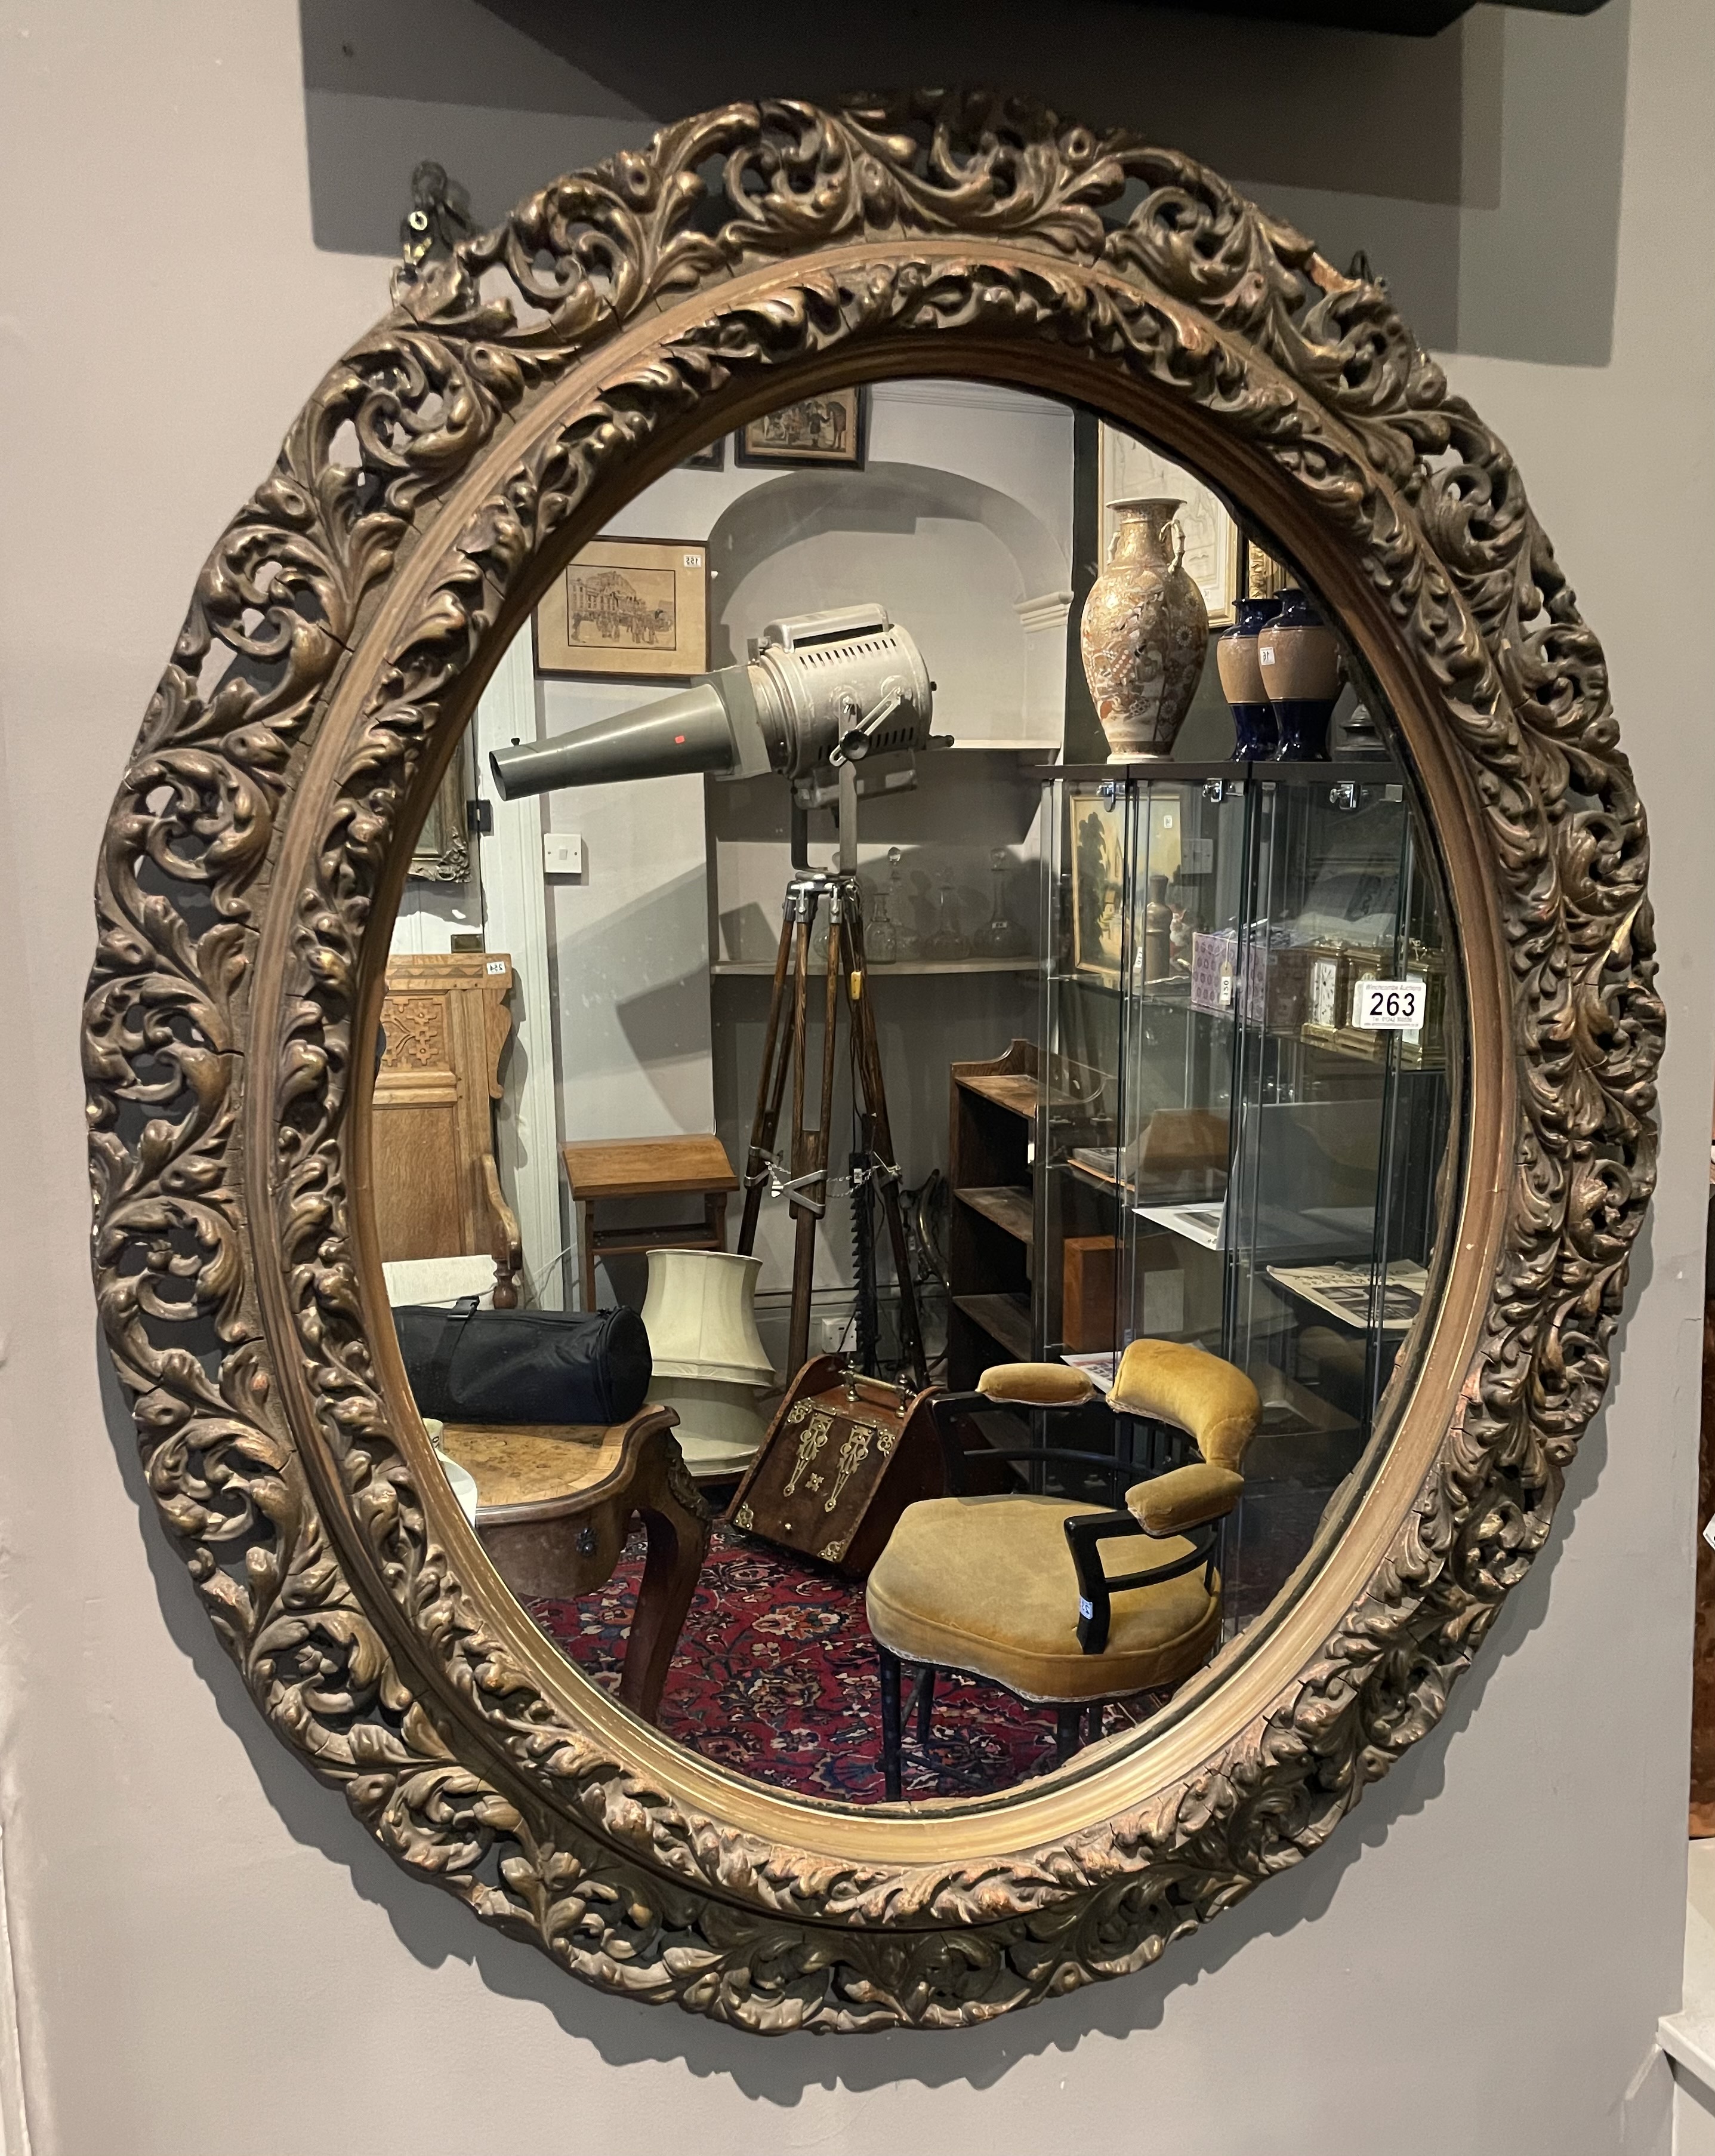 Victorian Oval Gilt Mirror